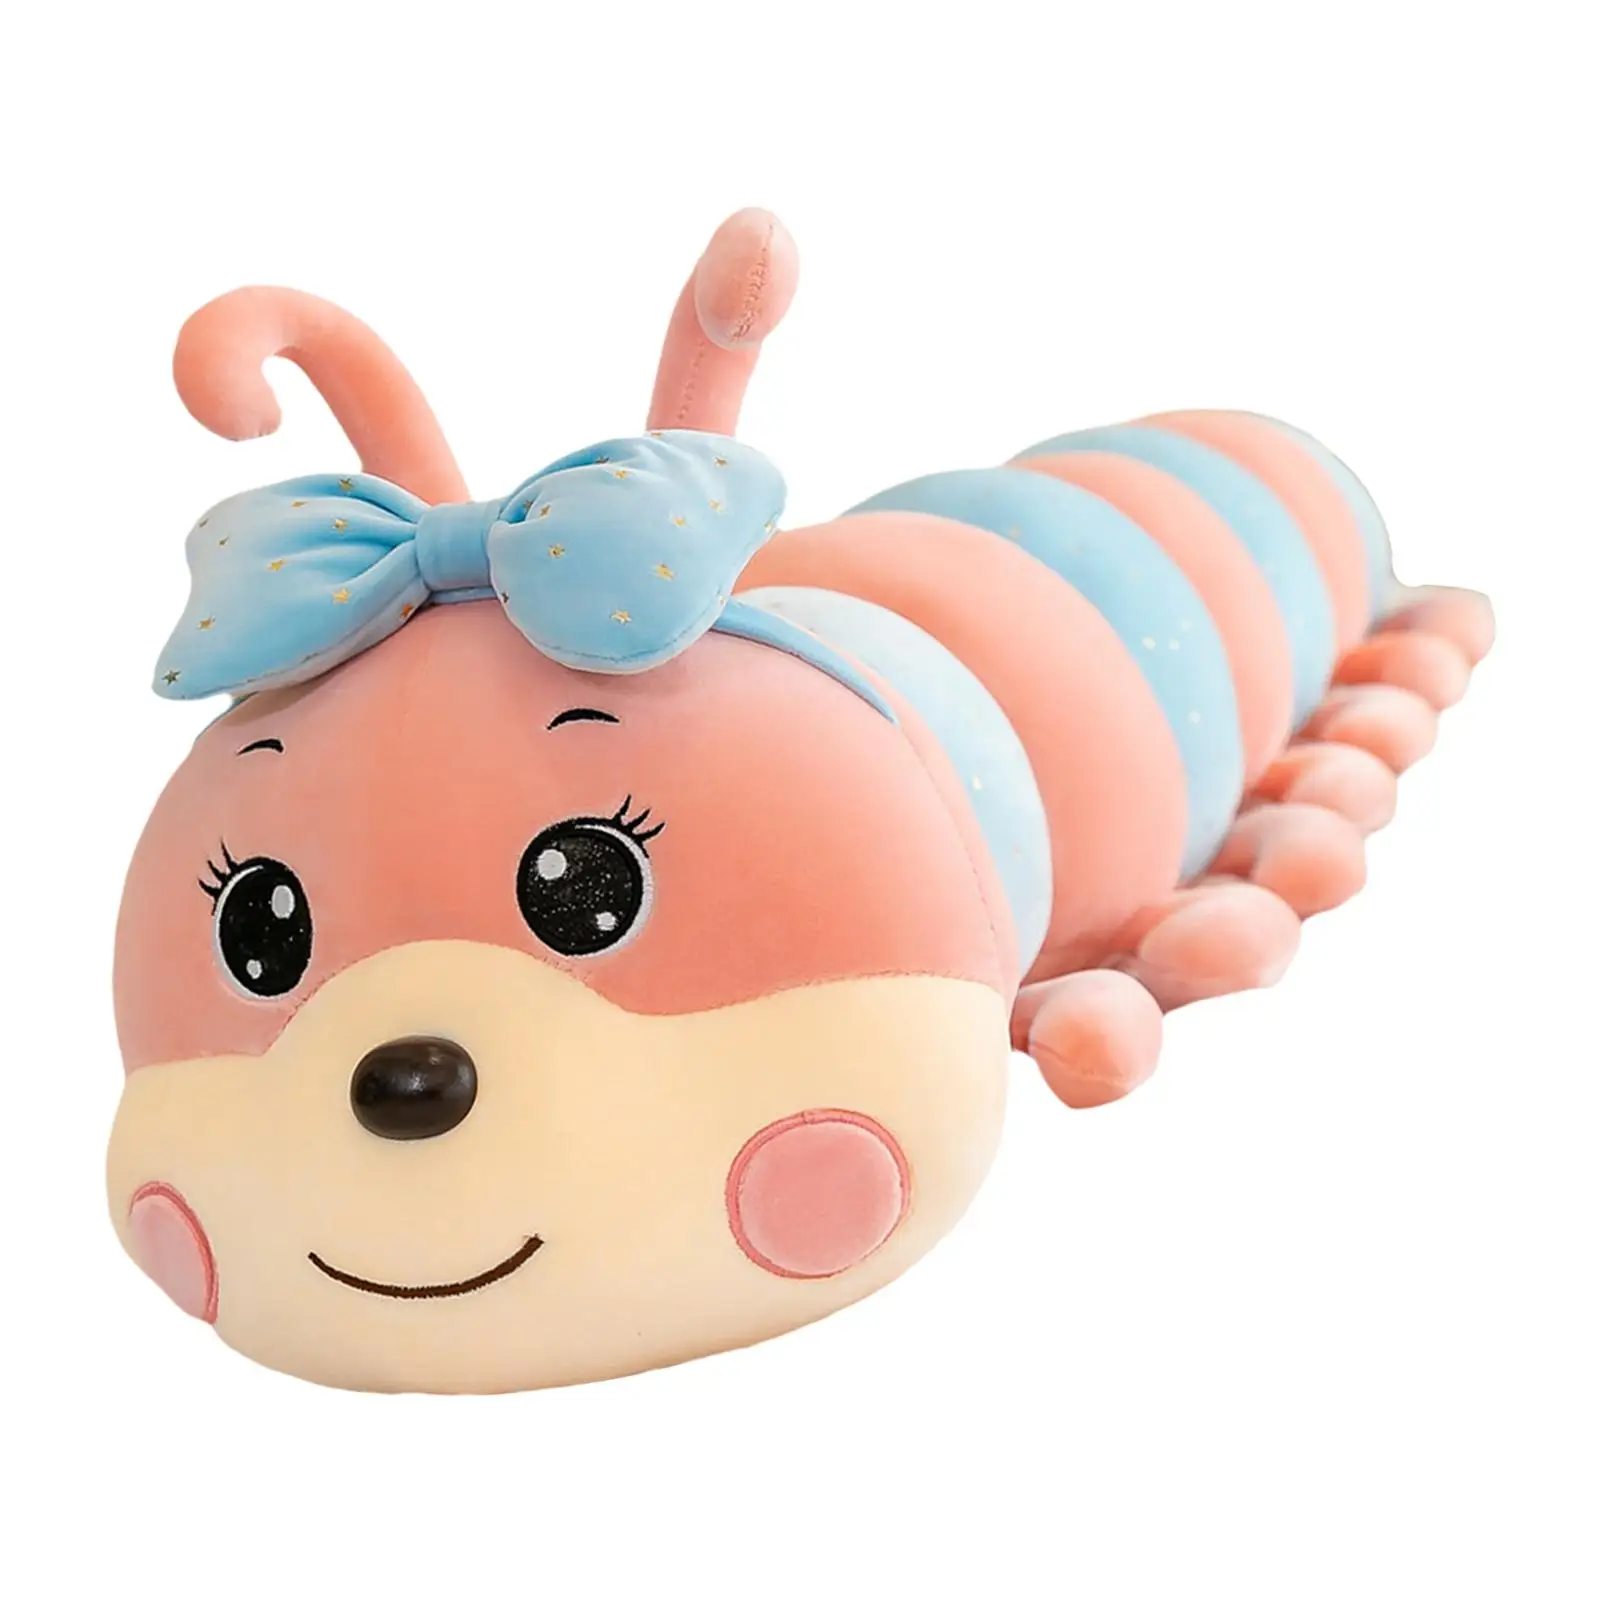 Creative Fruit Caterpillar Toys Sleeping  Doll Plush Toy for Kids Baby